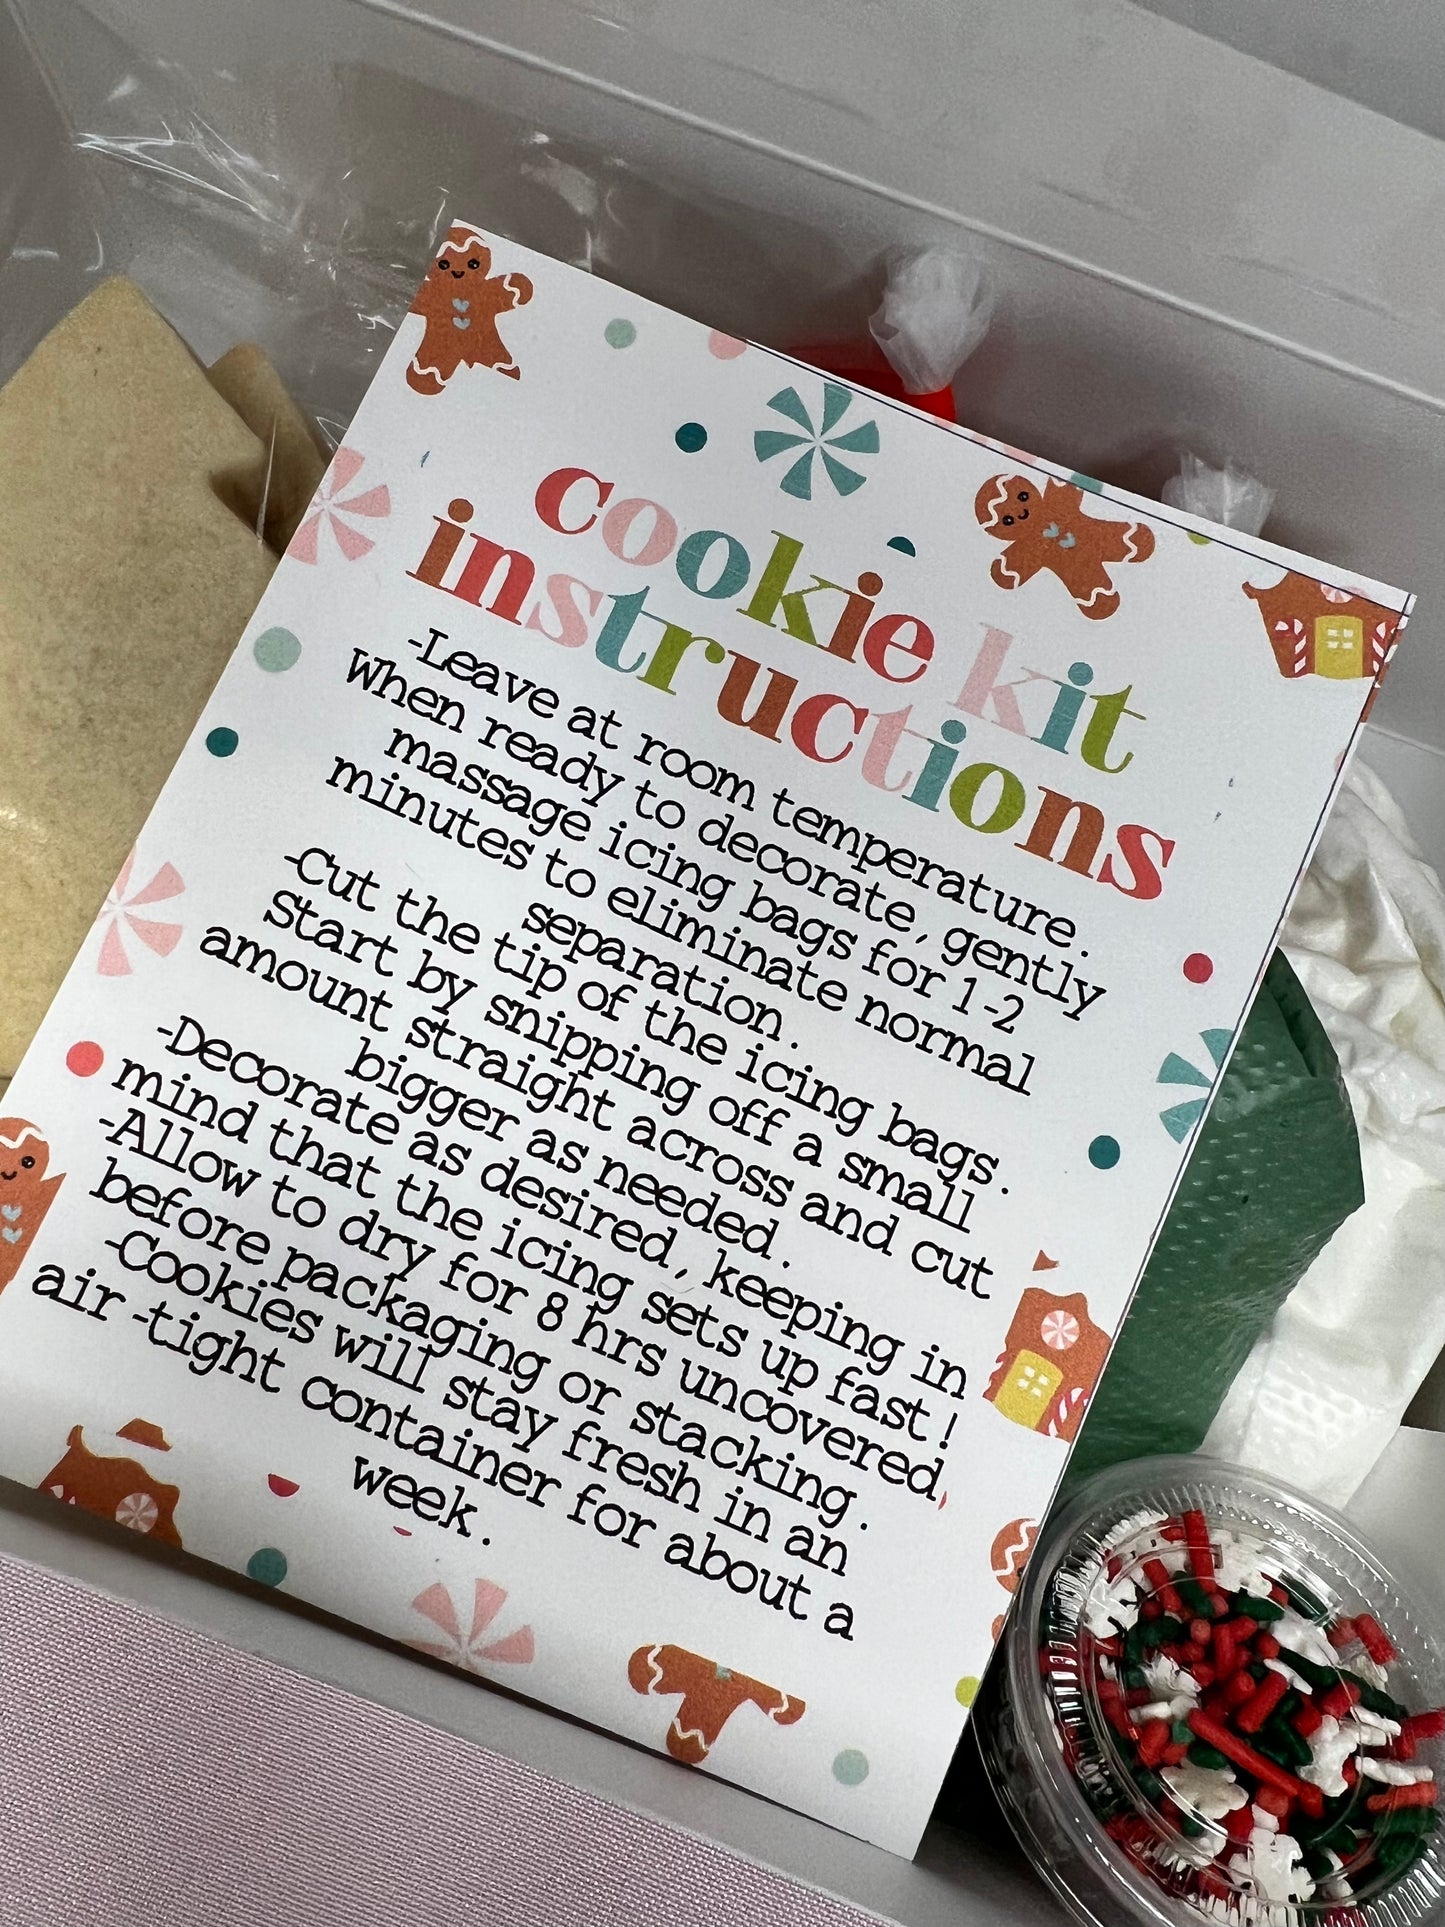 Holiday DIY Sugar cookie Decorating Kit